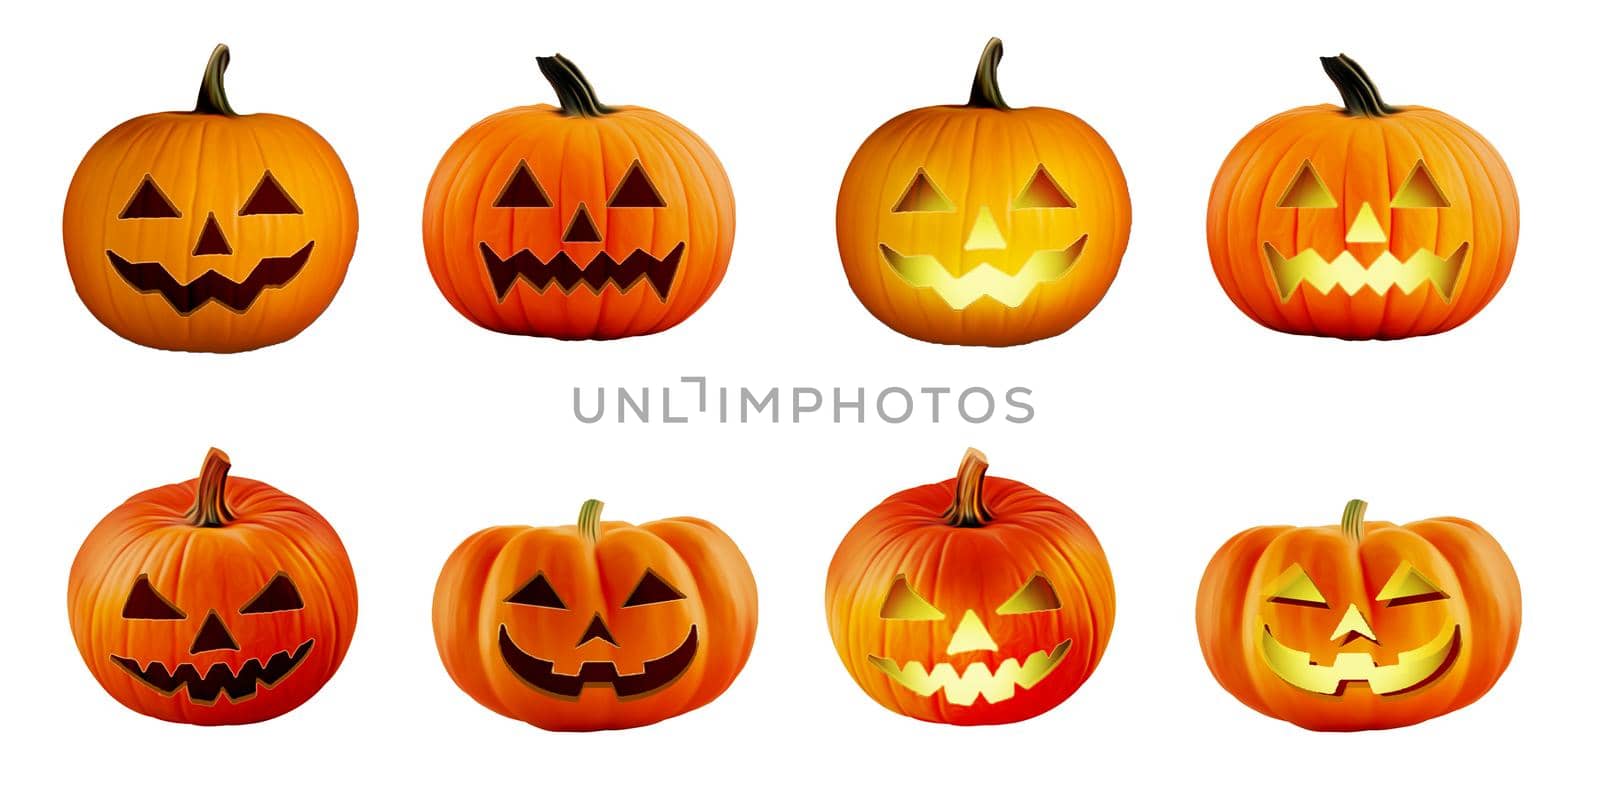 Halloween pumpkin head (jack o lantern) realistic illustration set